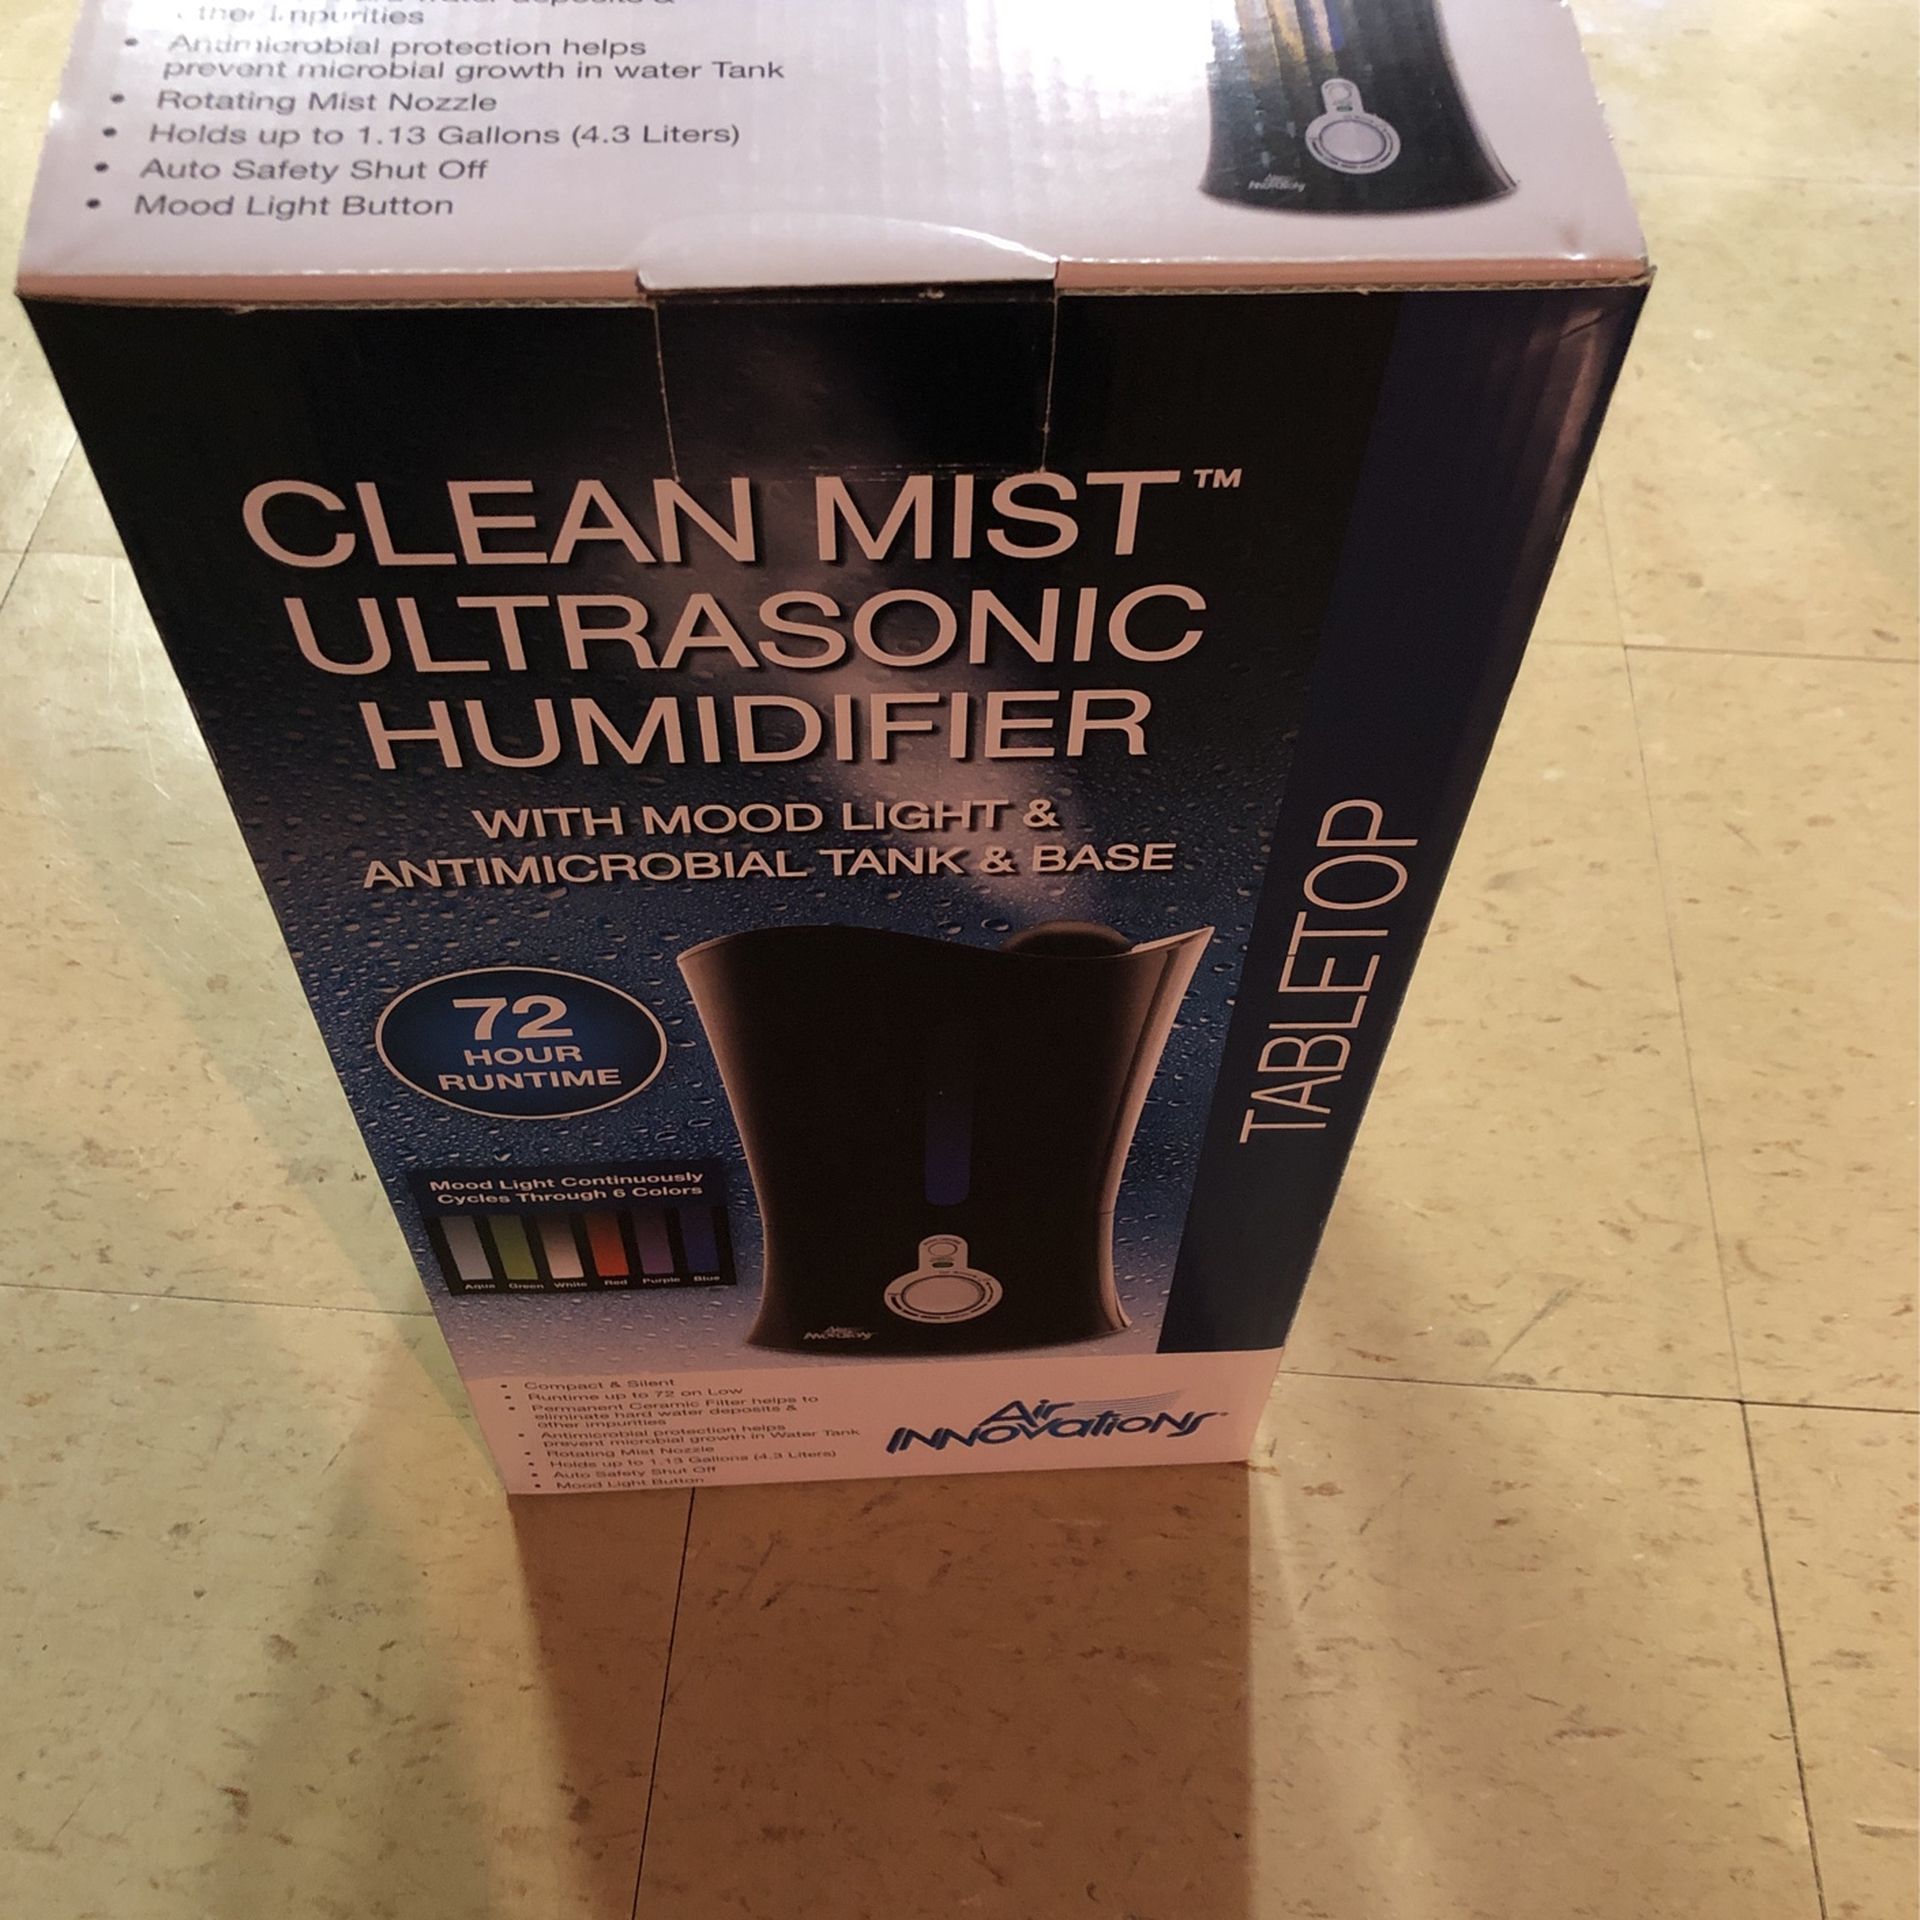 Clean Must Ultrasonic Humidifier